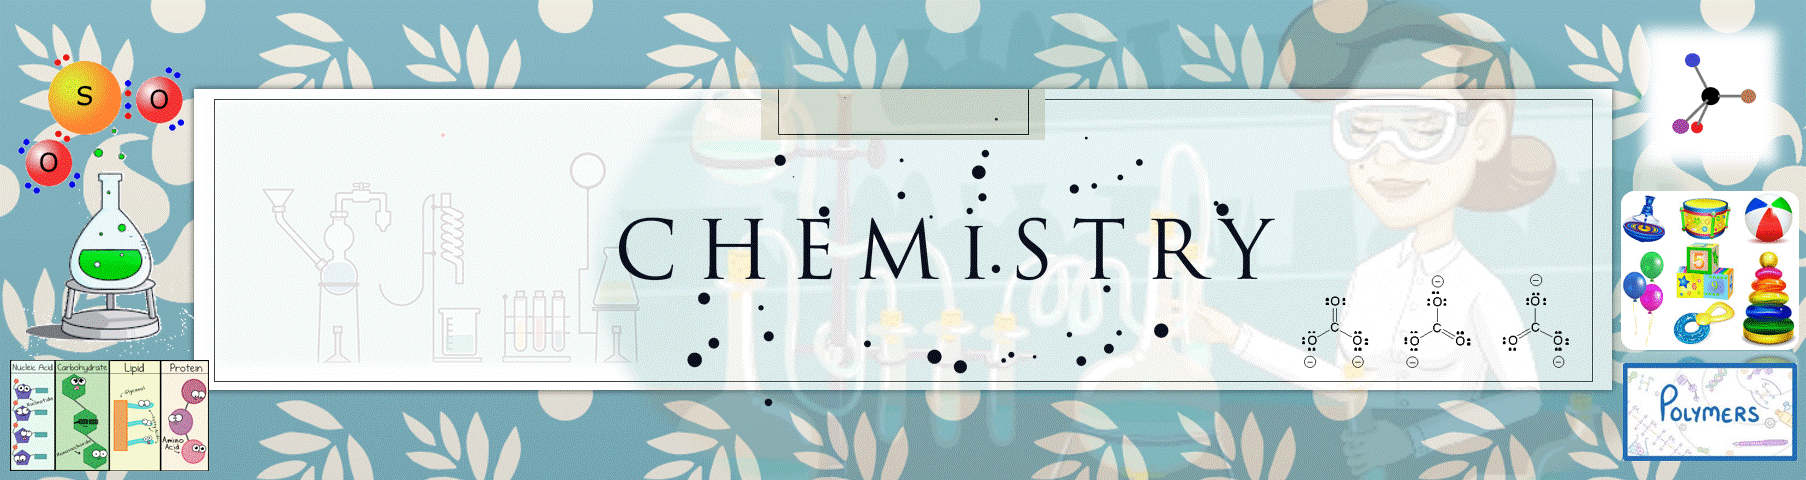 General Chemistry 1 - Quarter 4 (for Enhancement)